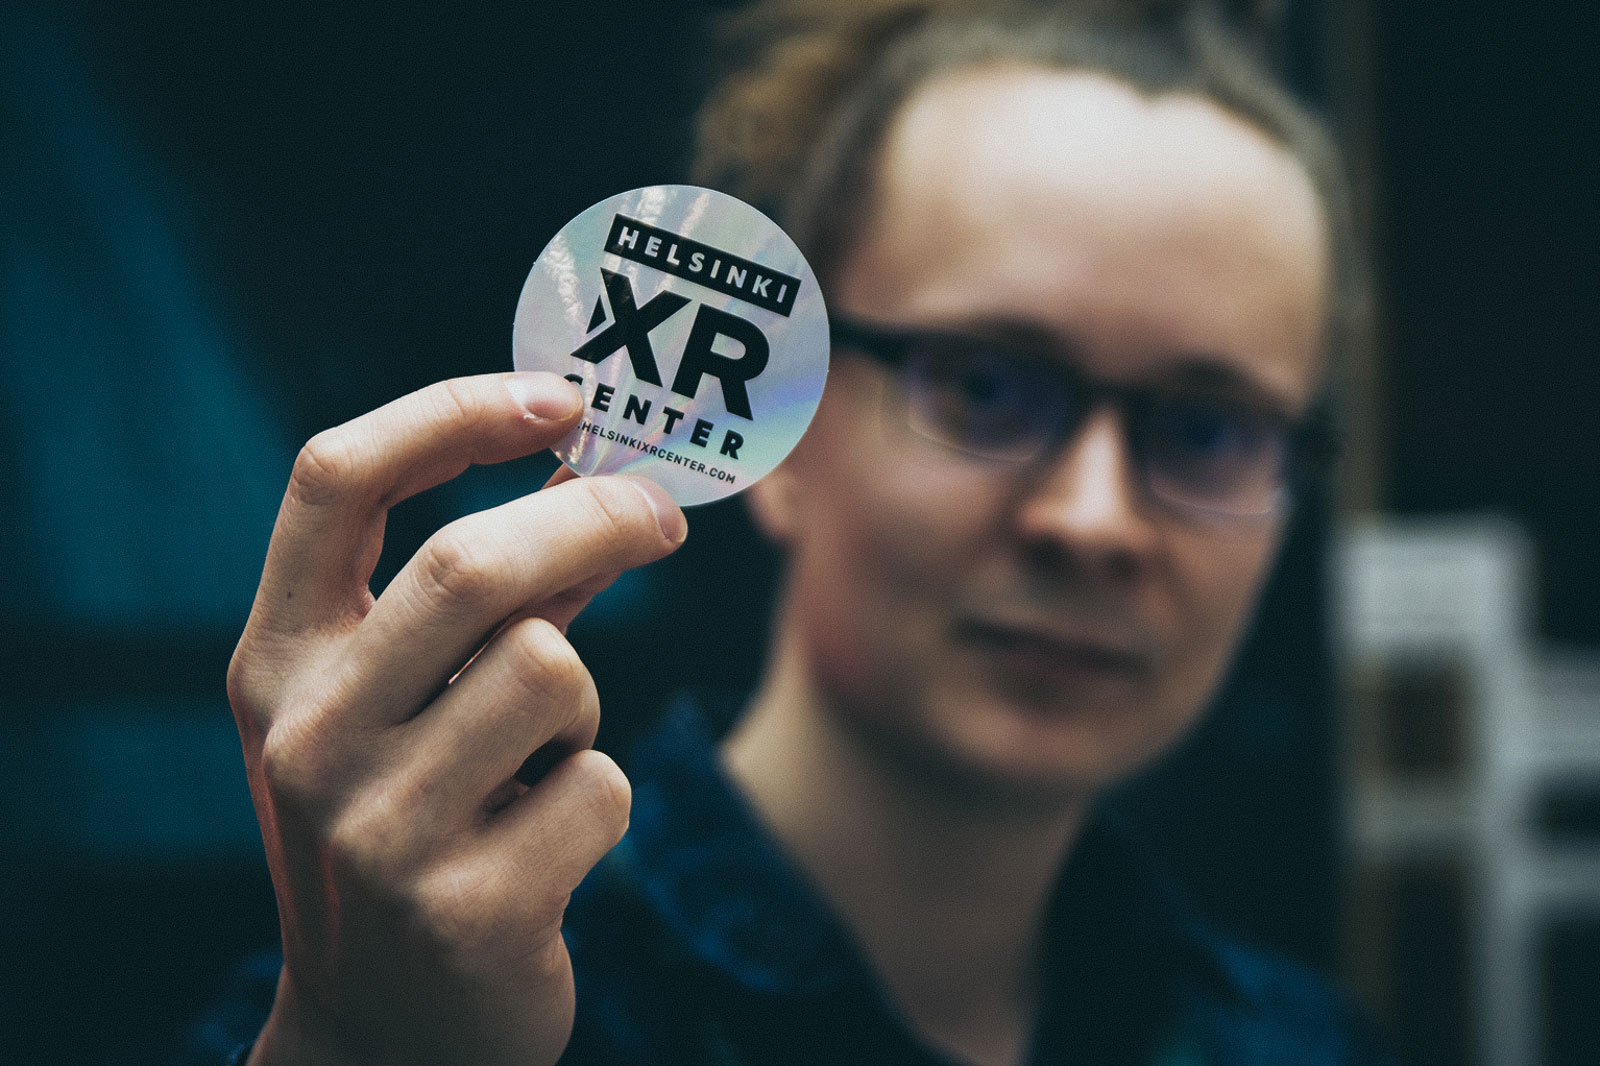 Helsinki XR Center crew member holding a HXRC sticker in the air.